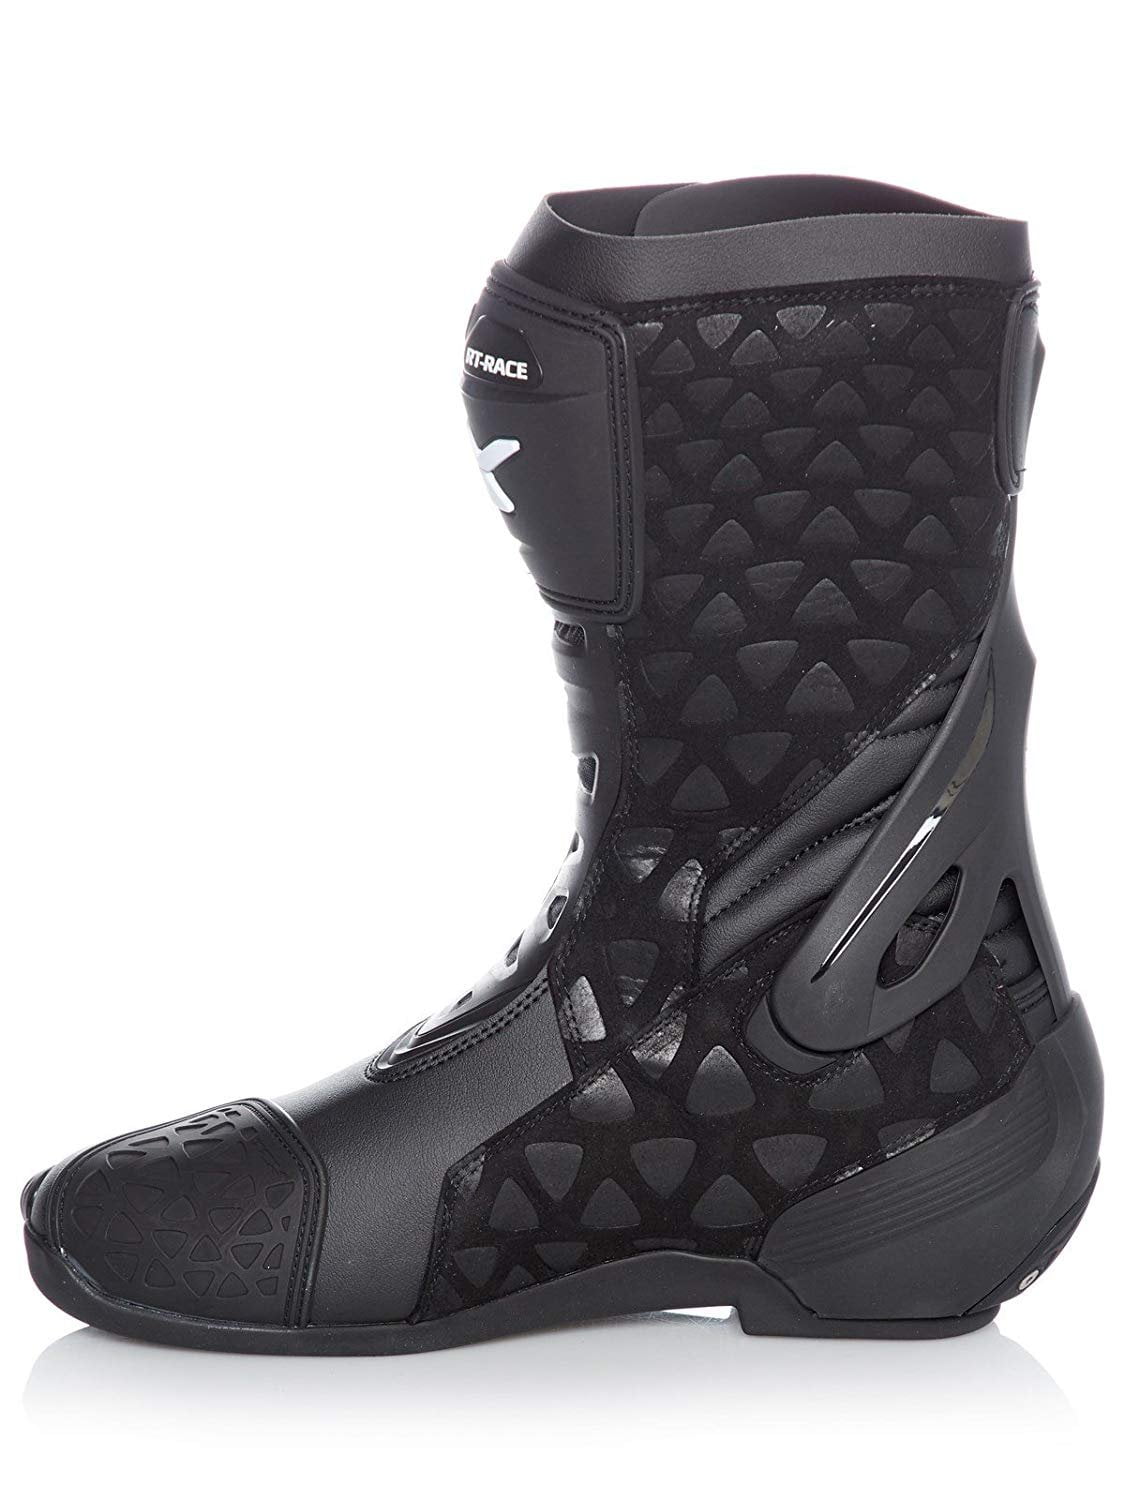 TCX RT-Race Boots, Black, Size:41 - Walmart.com